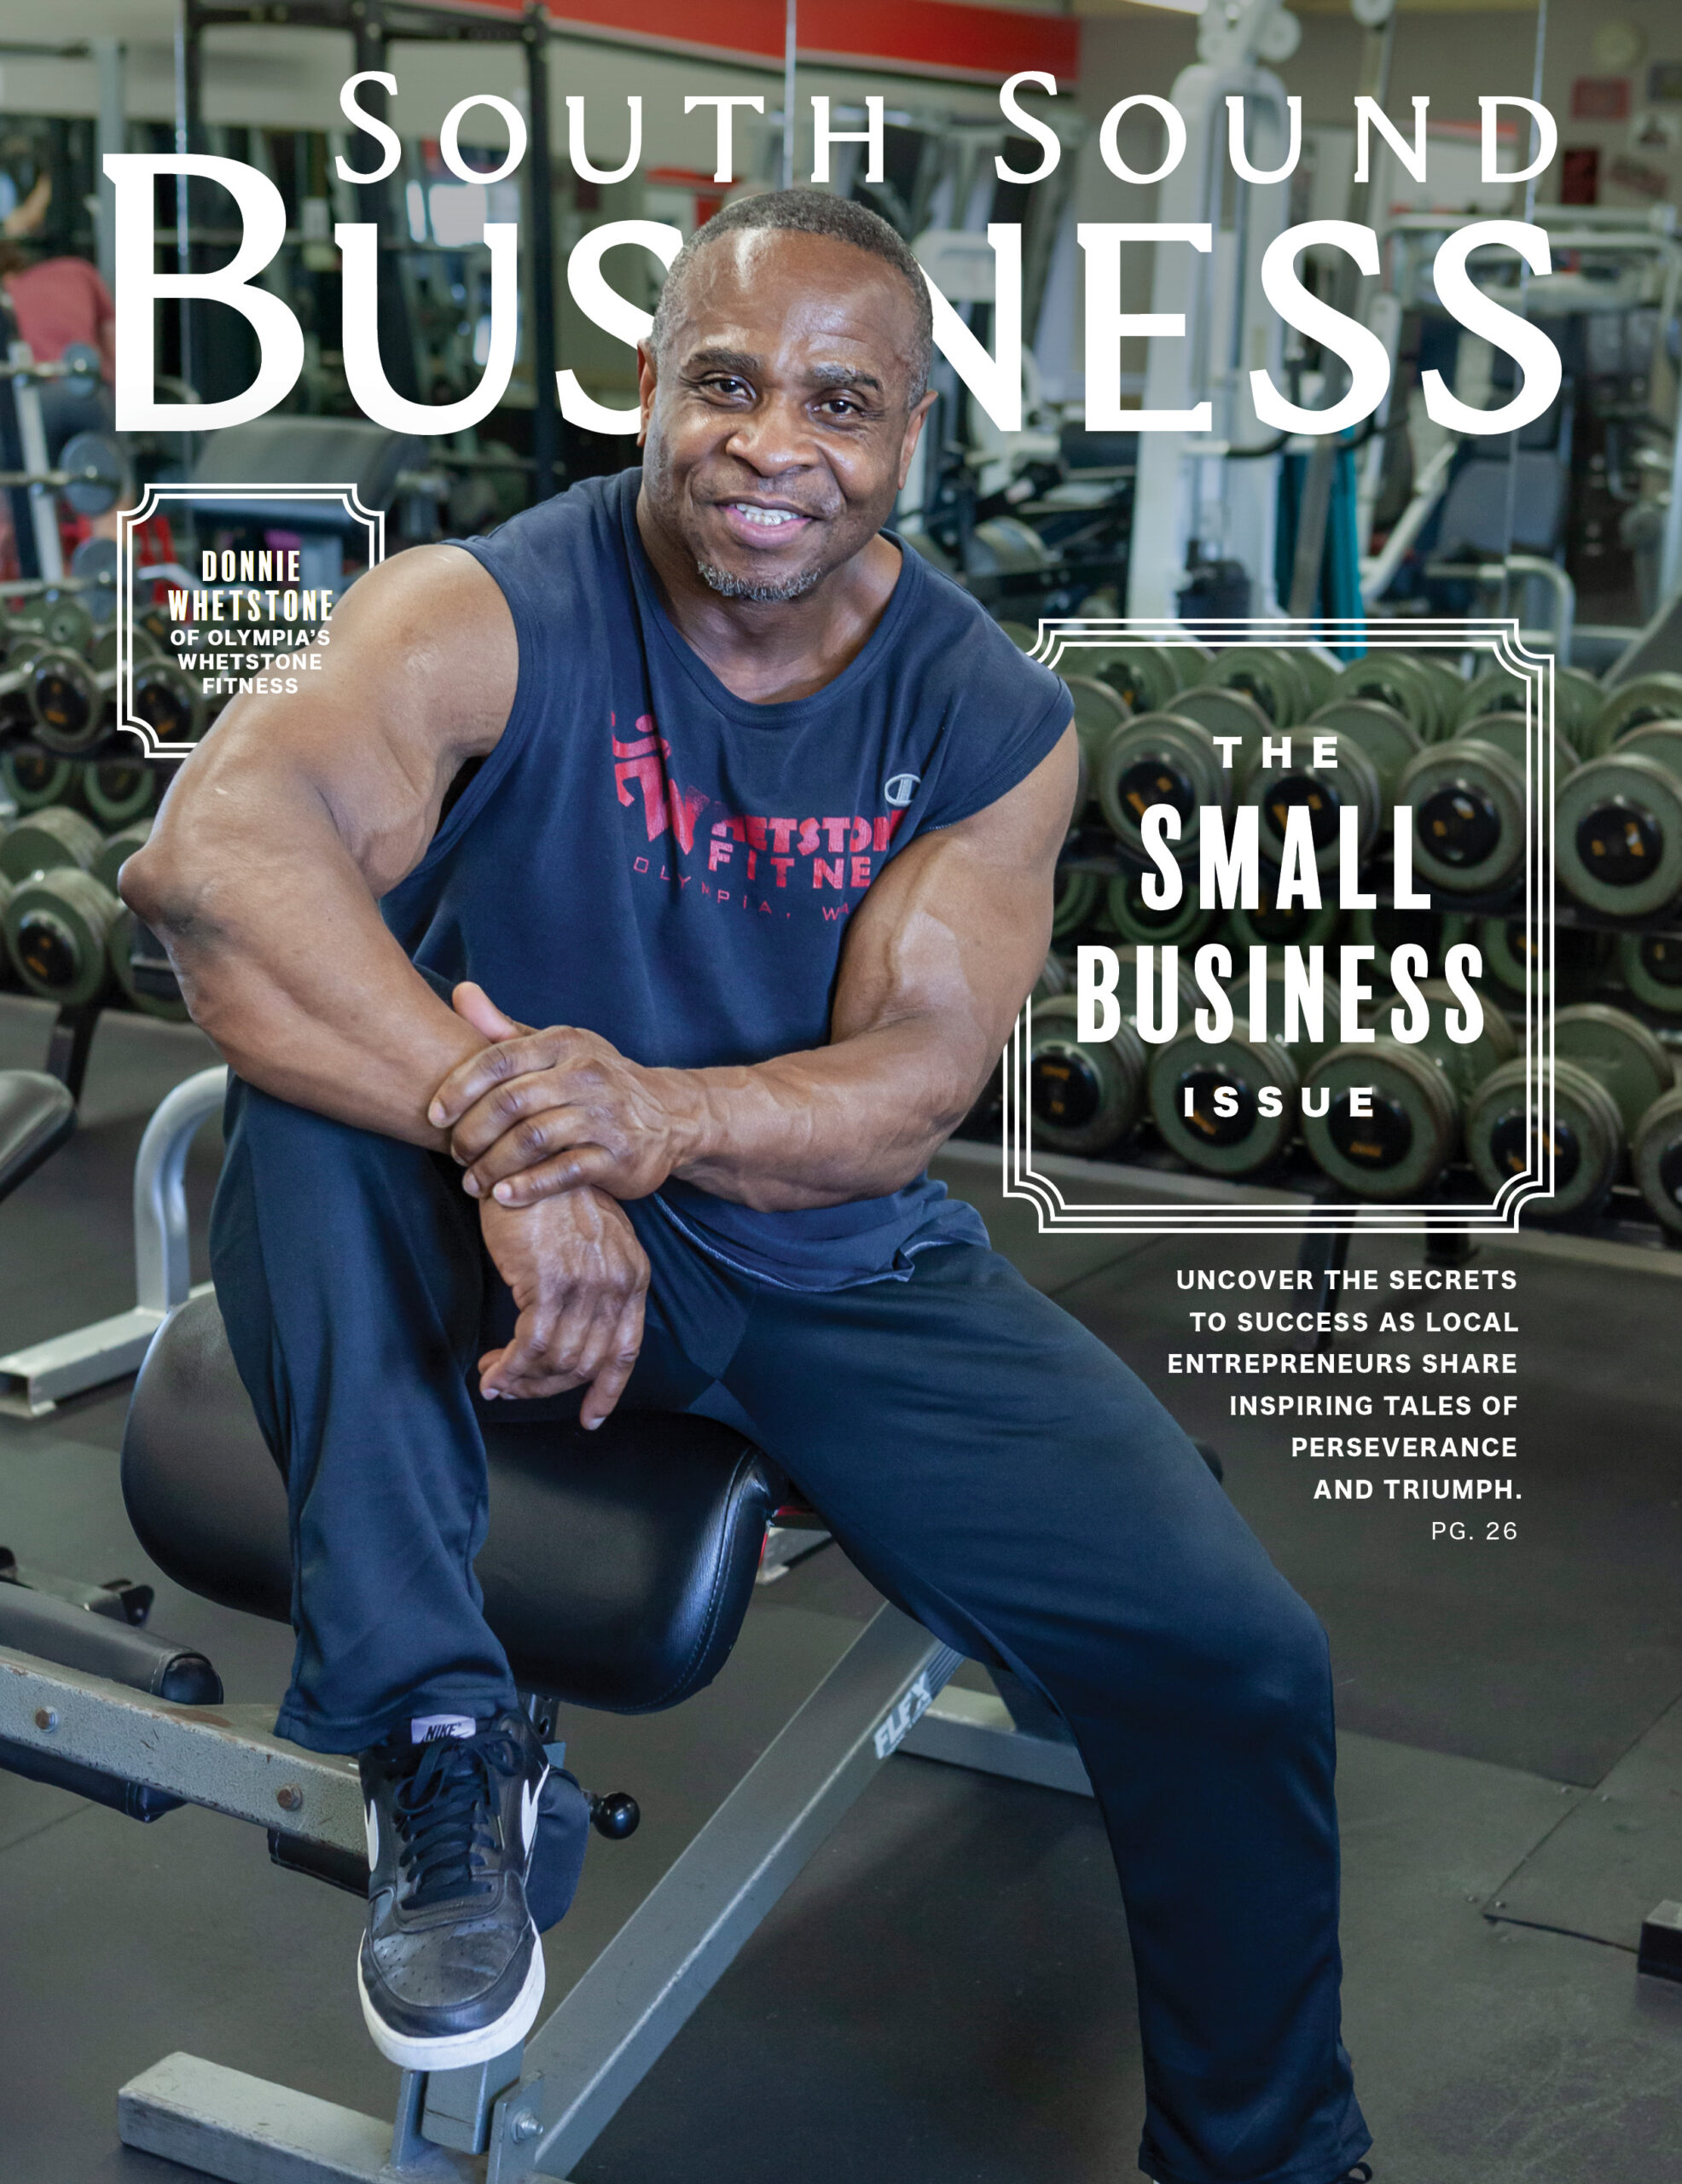 South Sound Business Magazine Cover